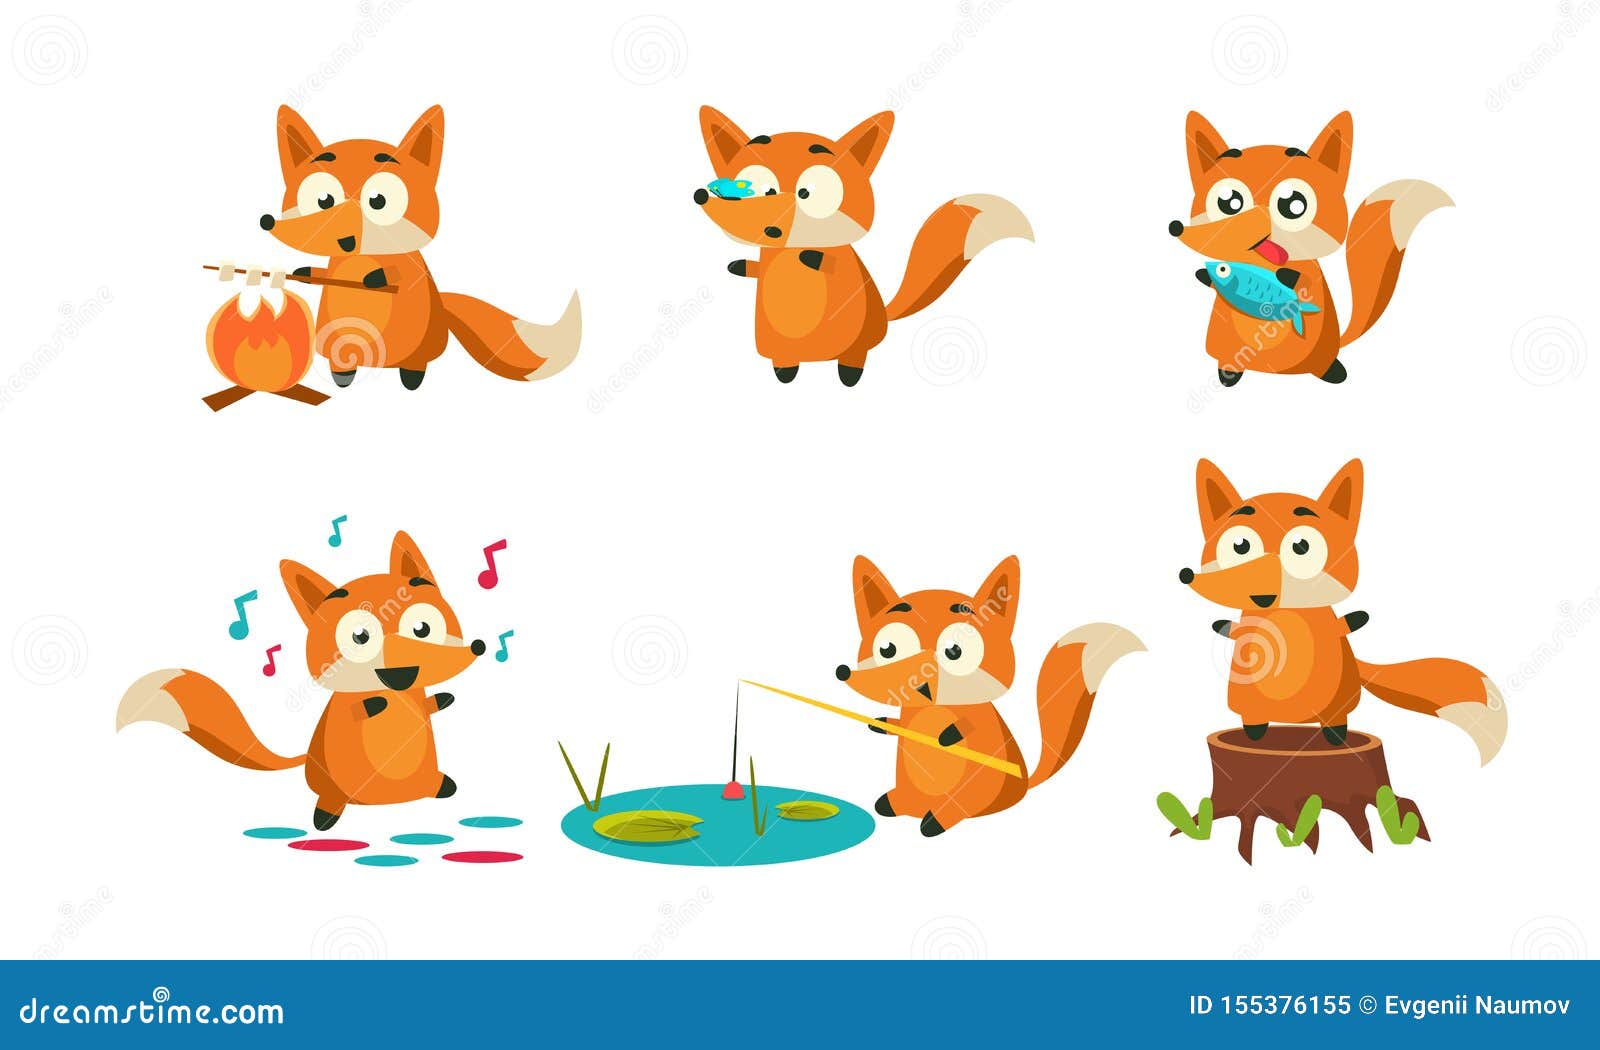 Cute kawaii fox with hot milk Illustration Stock